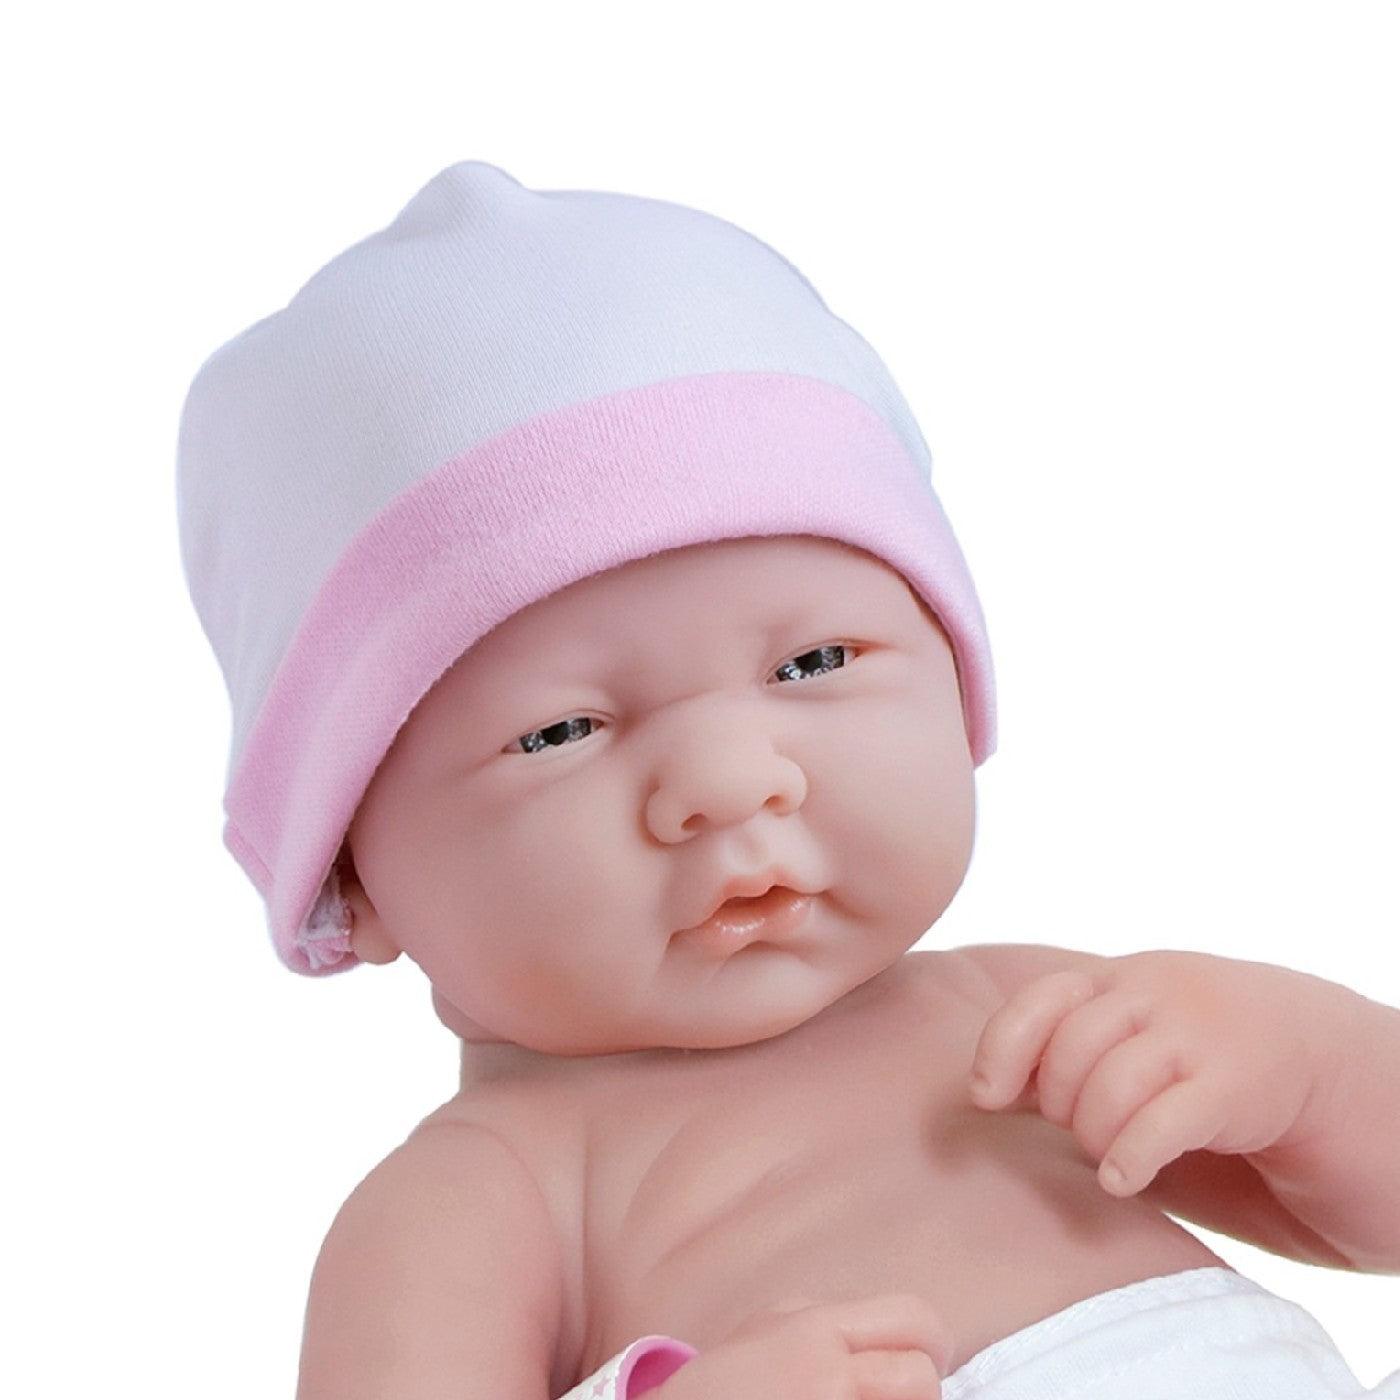 JC Toys, La Newborn 14 inch Life-Like All Vinyl Baby Doll Rocking Crib Gift Set - JC Toys Group Inc.